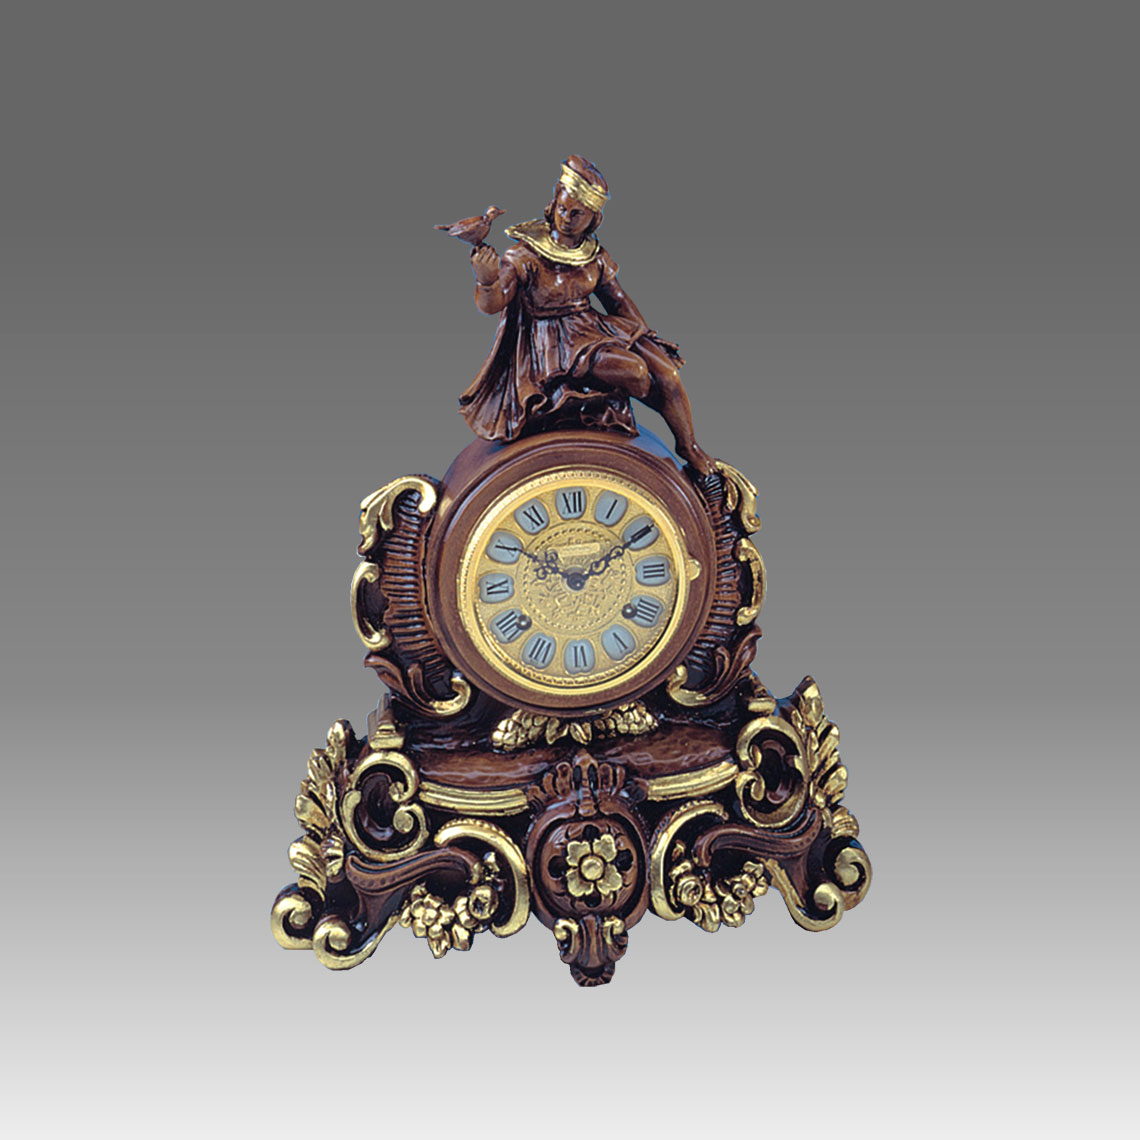 Mante Clock, Table Clock, Cimn Clock, Art.332/2 walnut with gold leaf - Bim Bam melody on Bells, gilt gold round dial